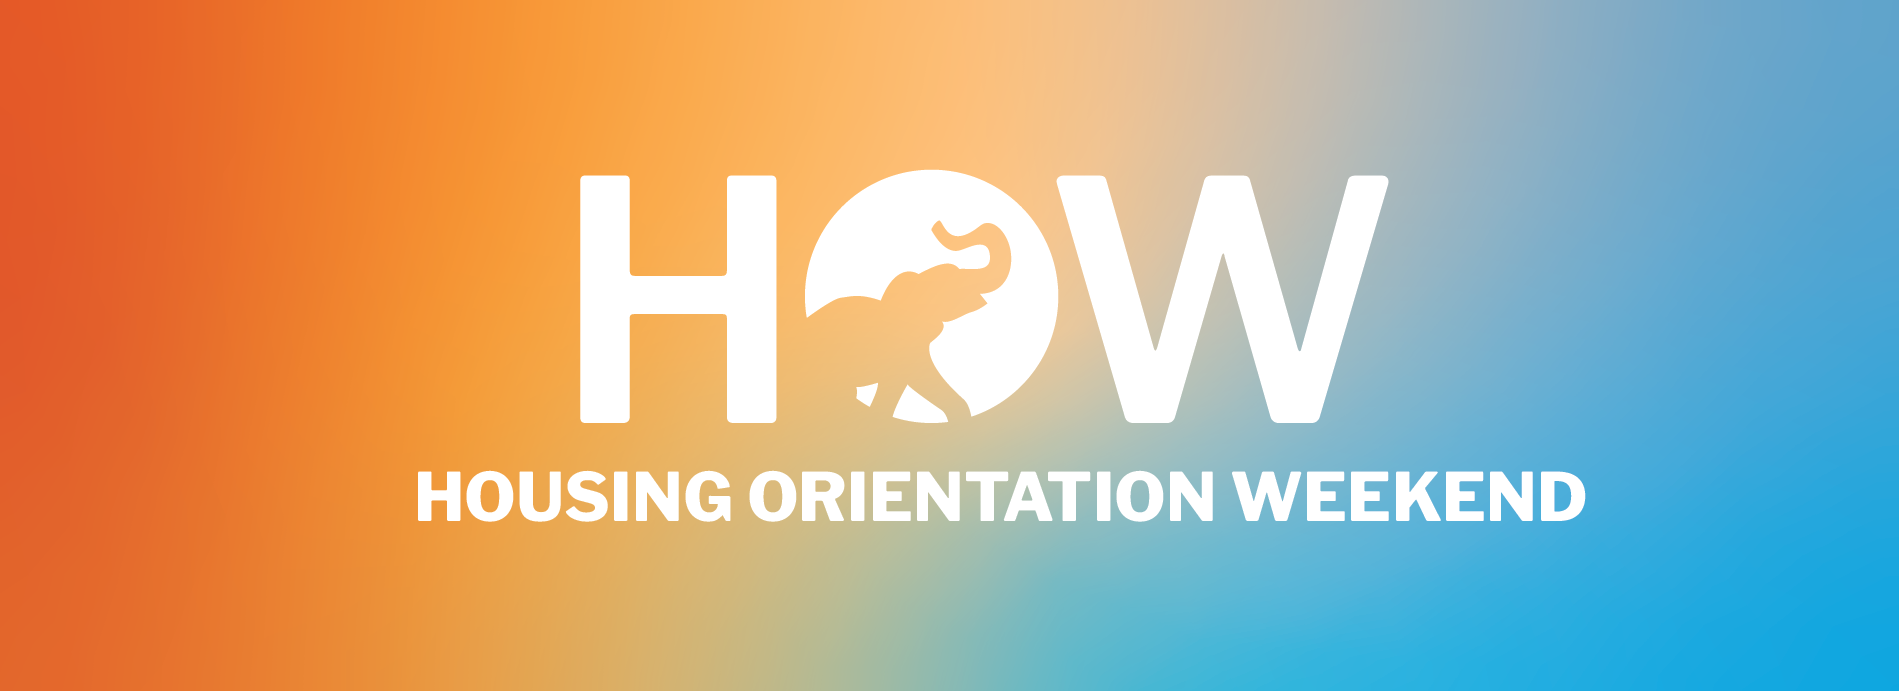 HOW: Housing Orientation Weekend Logo 